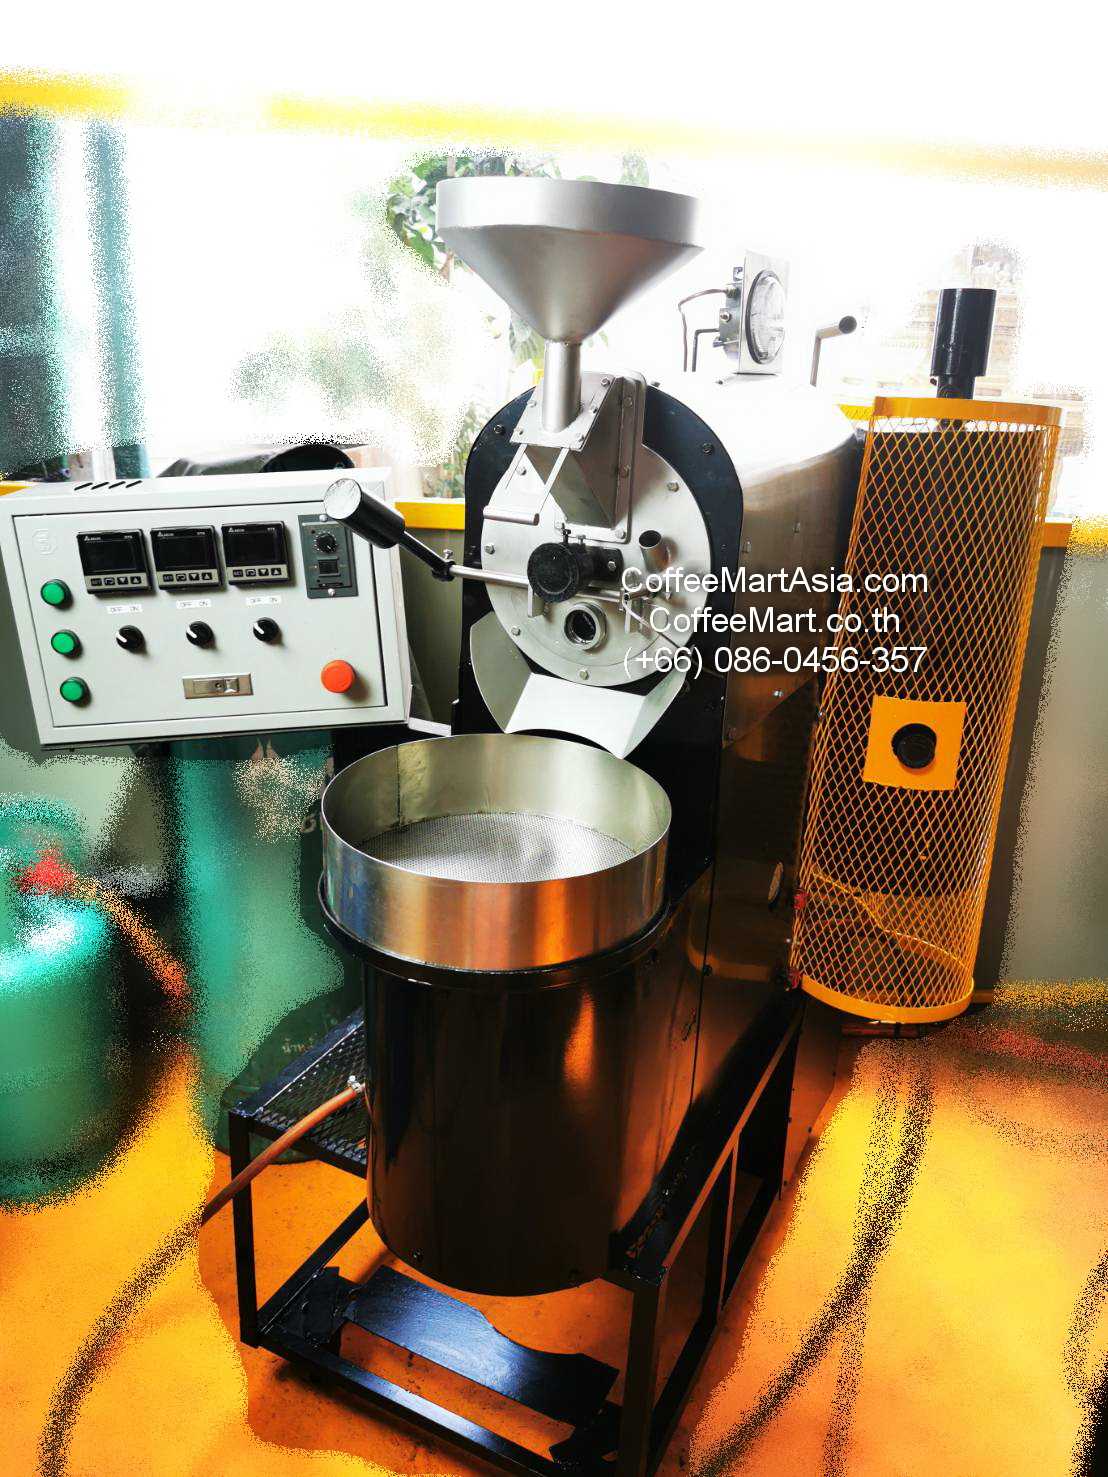 Pre Order เครื่องคั่วกาแฟ (ระบบลมร้อนหมุนเวียน) 2กิโลกรัม รุ่นRT4002-R22 เวลาส่งสินค้า5-7วัน